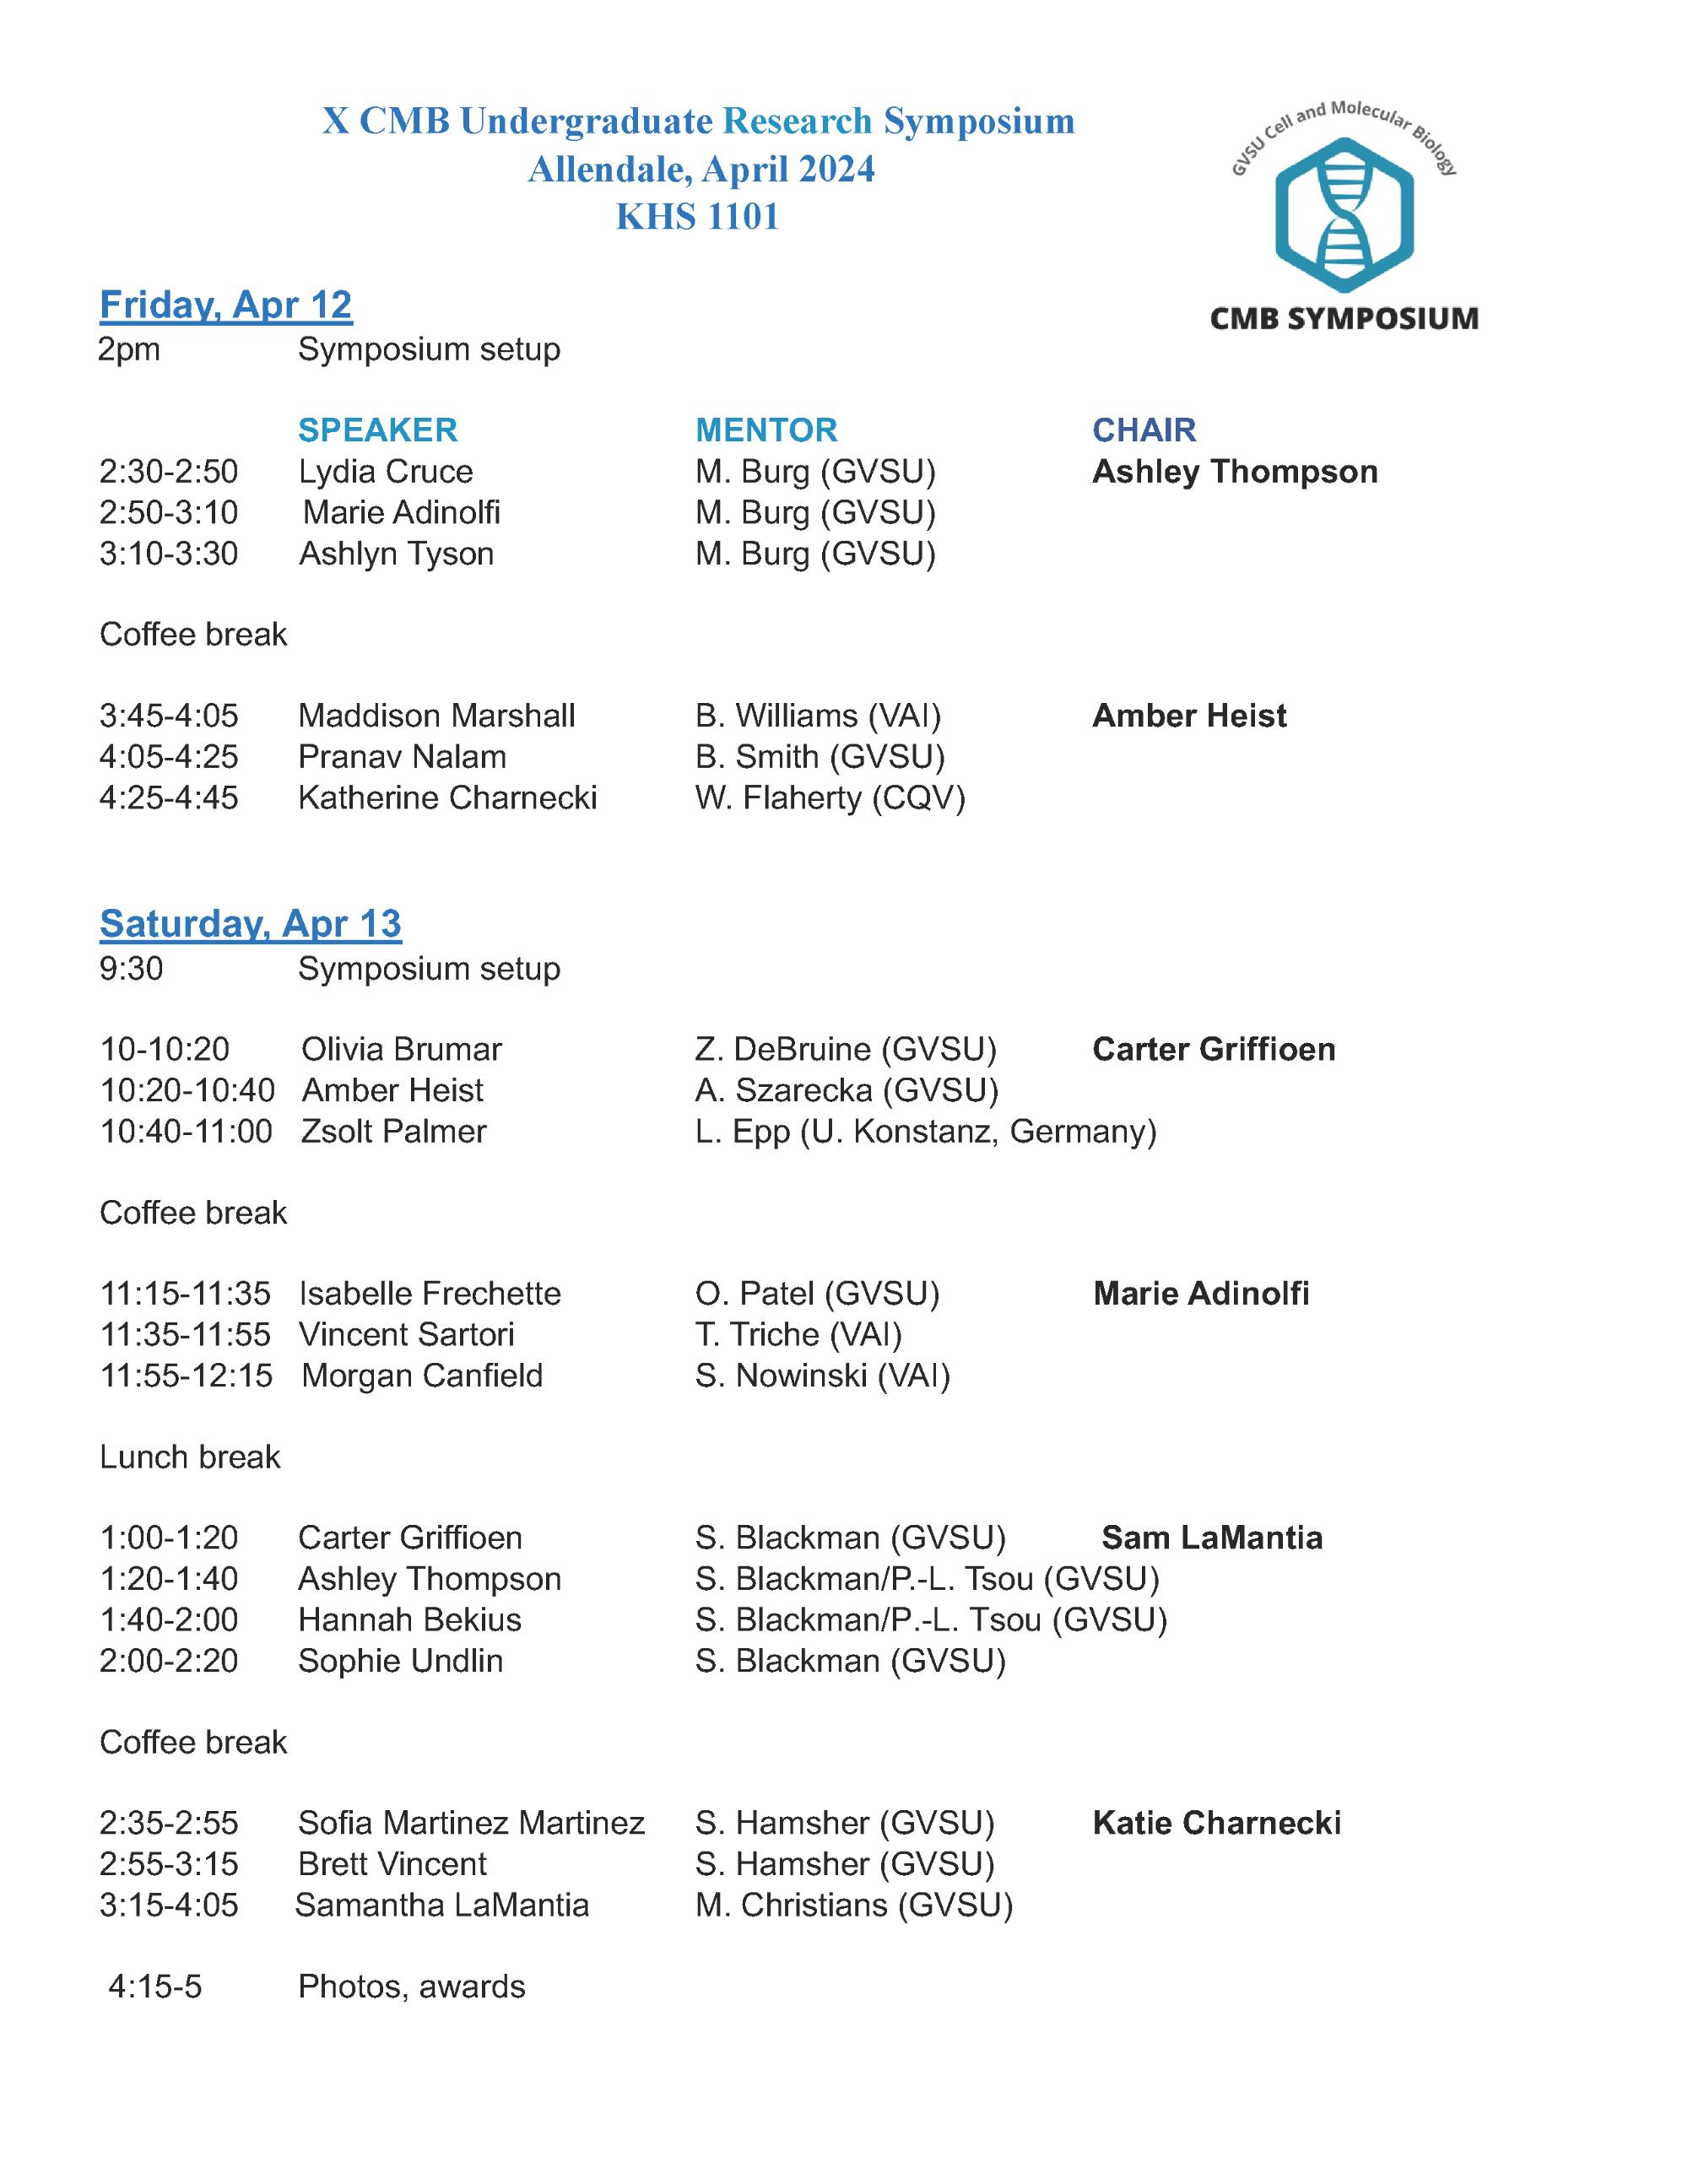 CMB Symposium Schedule of Presenters